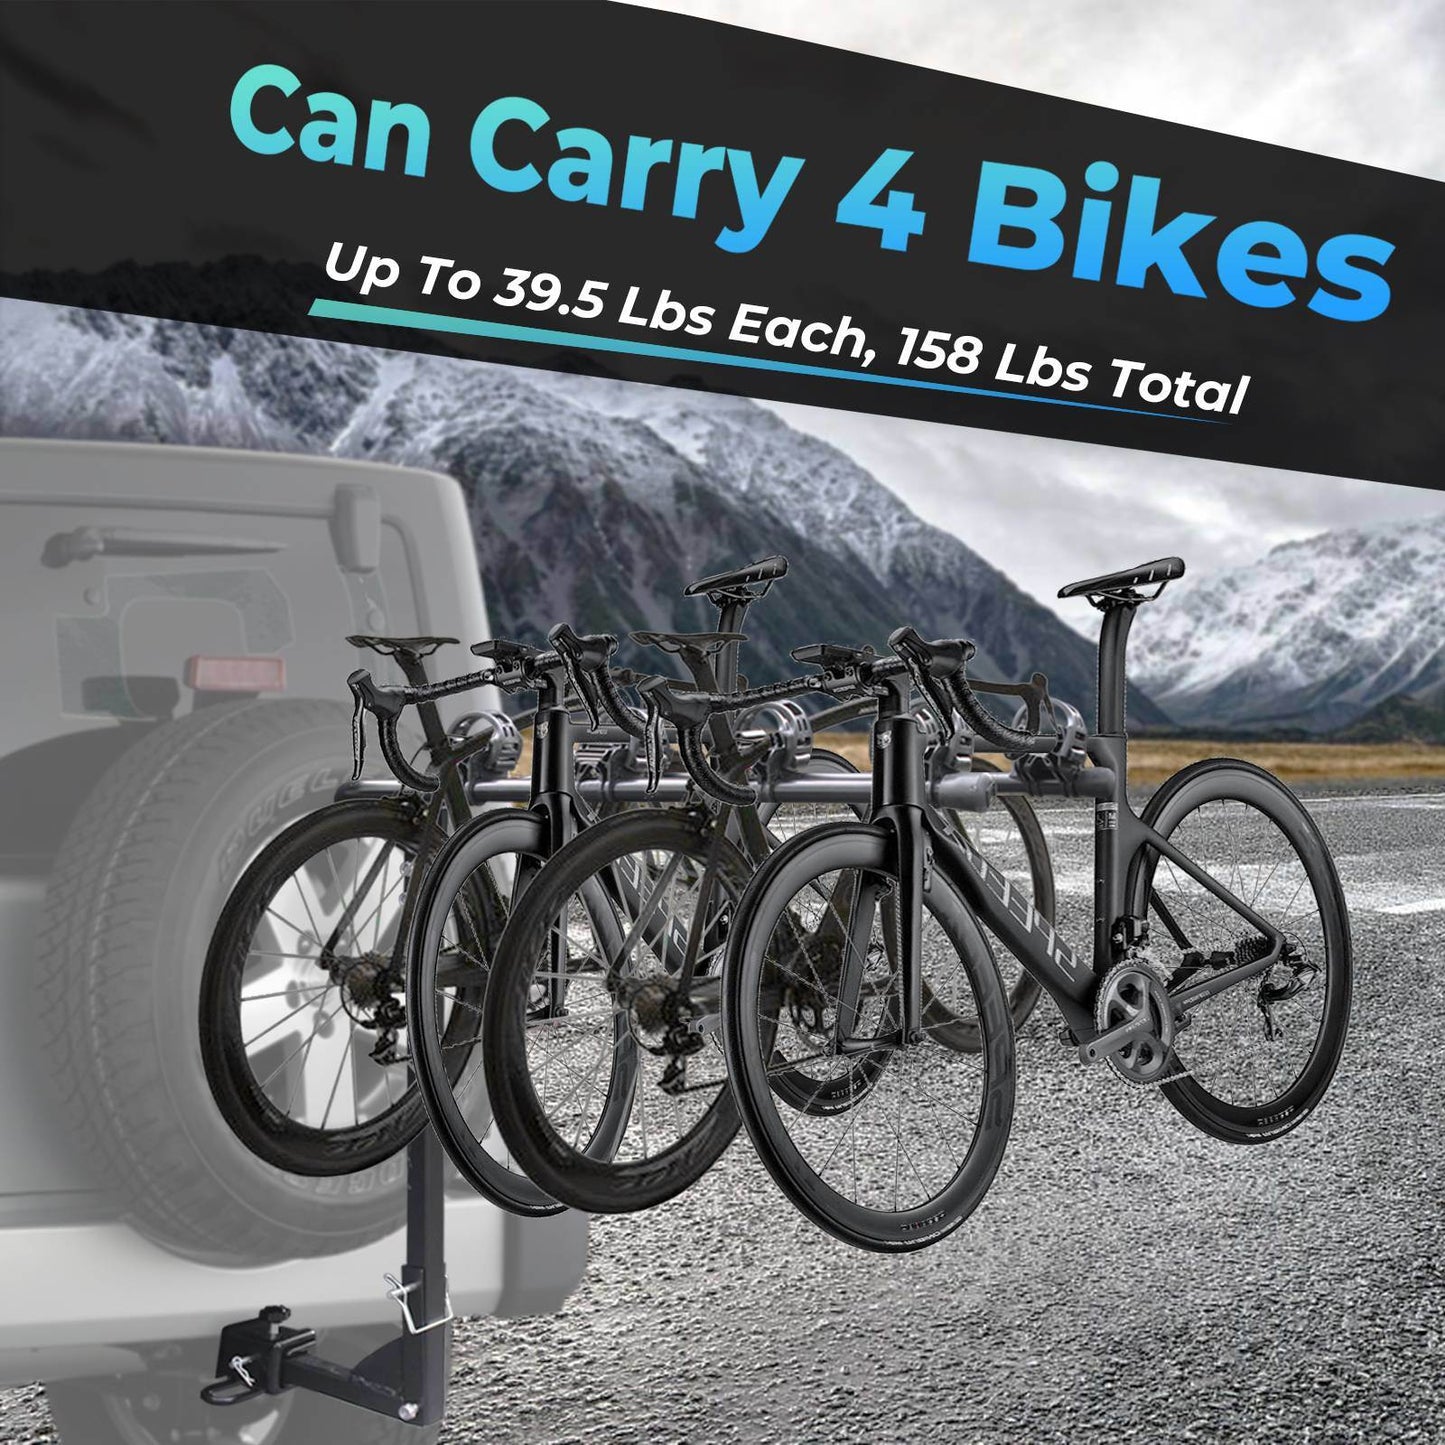 Hitch Mount Bike Rack, Heavy Weight Capacity Car Bike Rack 2'' Receiver for Standard,